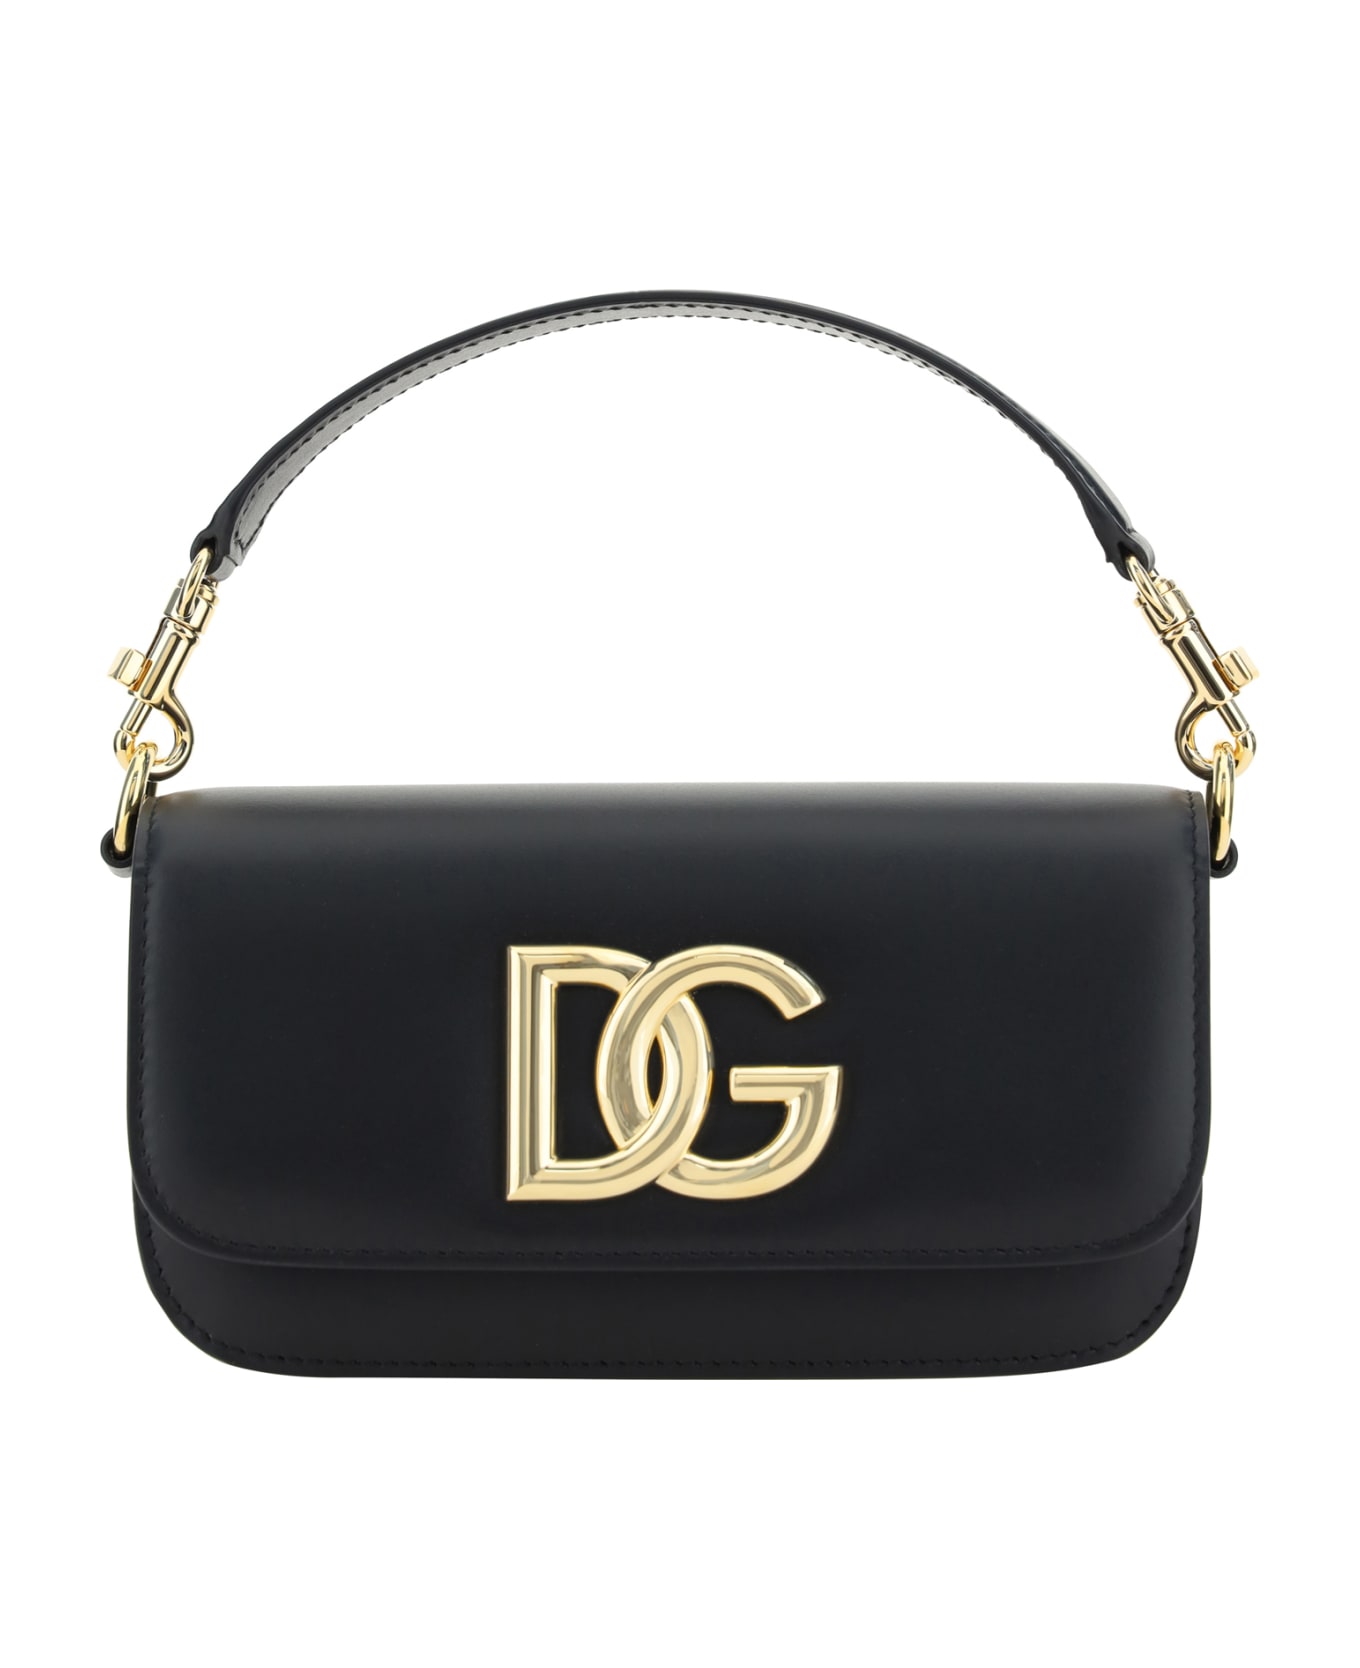 Dolce & Gabbana 3.5 Crossbody Bag - Nero トートバッグ